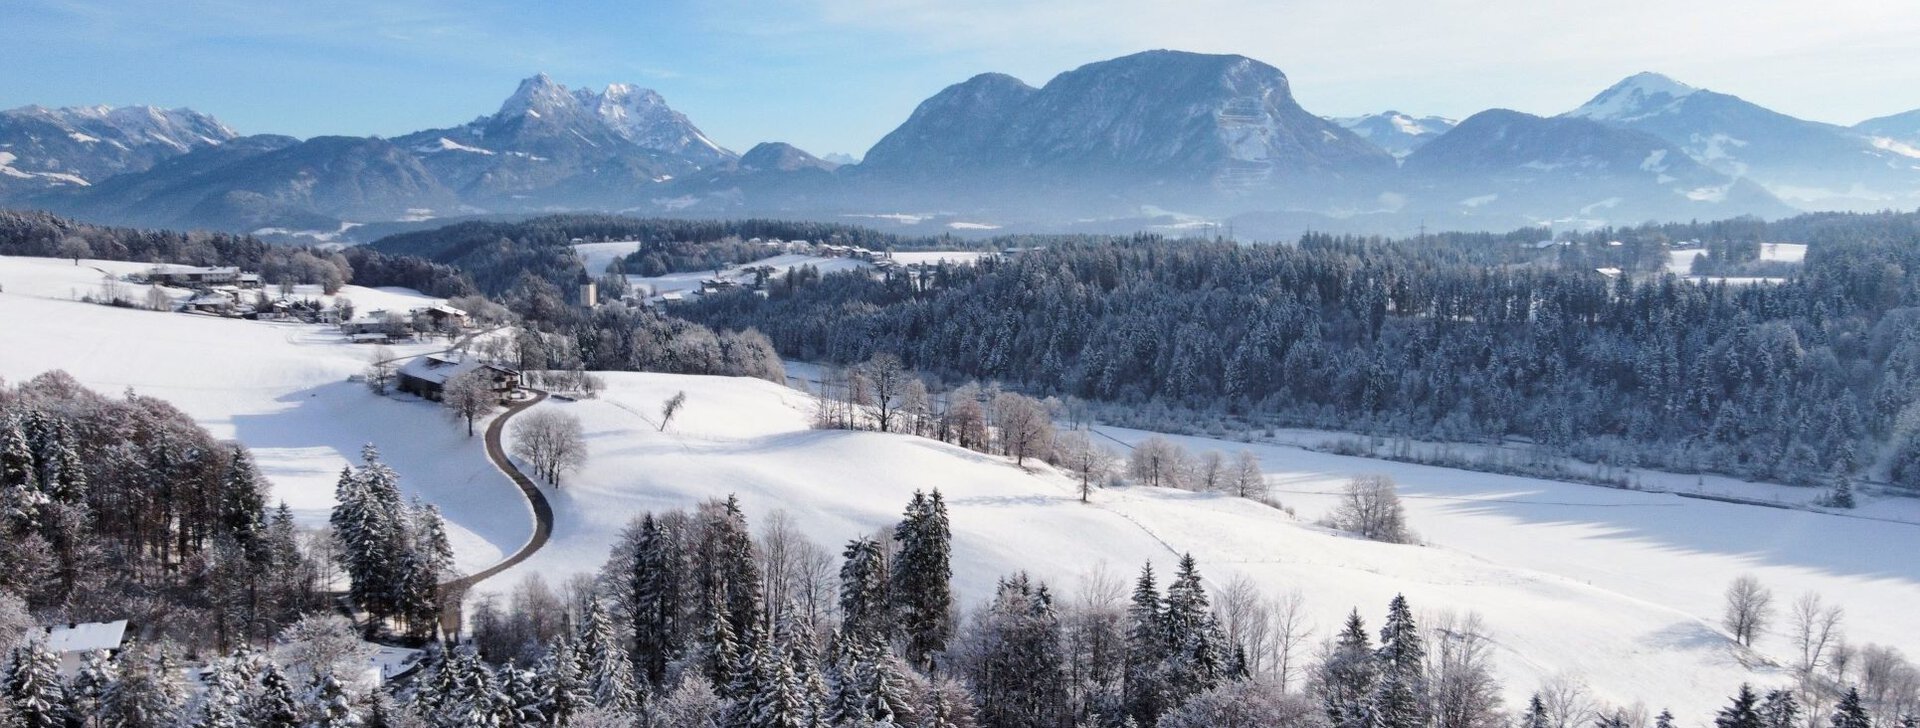 Umgebung, Landsitz in Tirol, Immobilie kaufen, Angerberg | © HausBauHaus GmbH